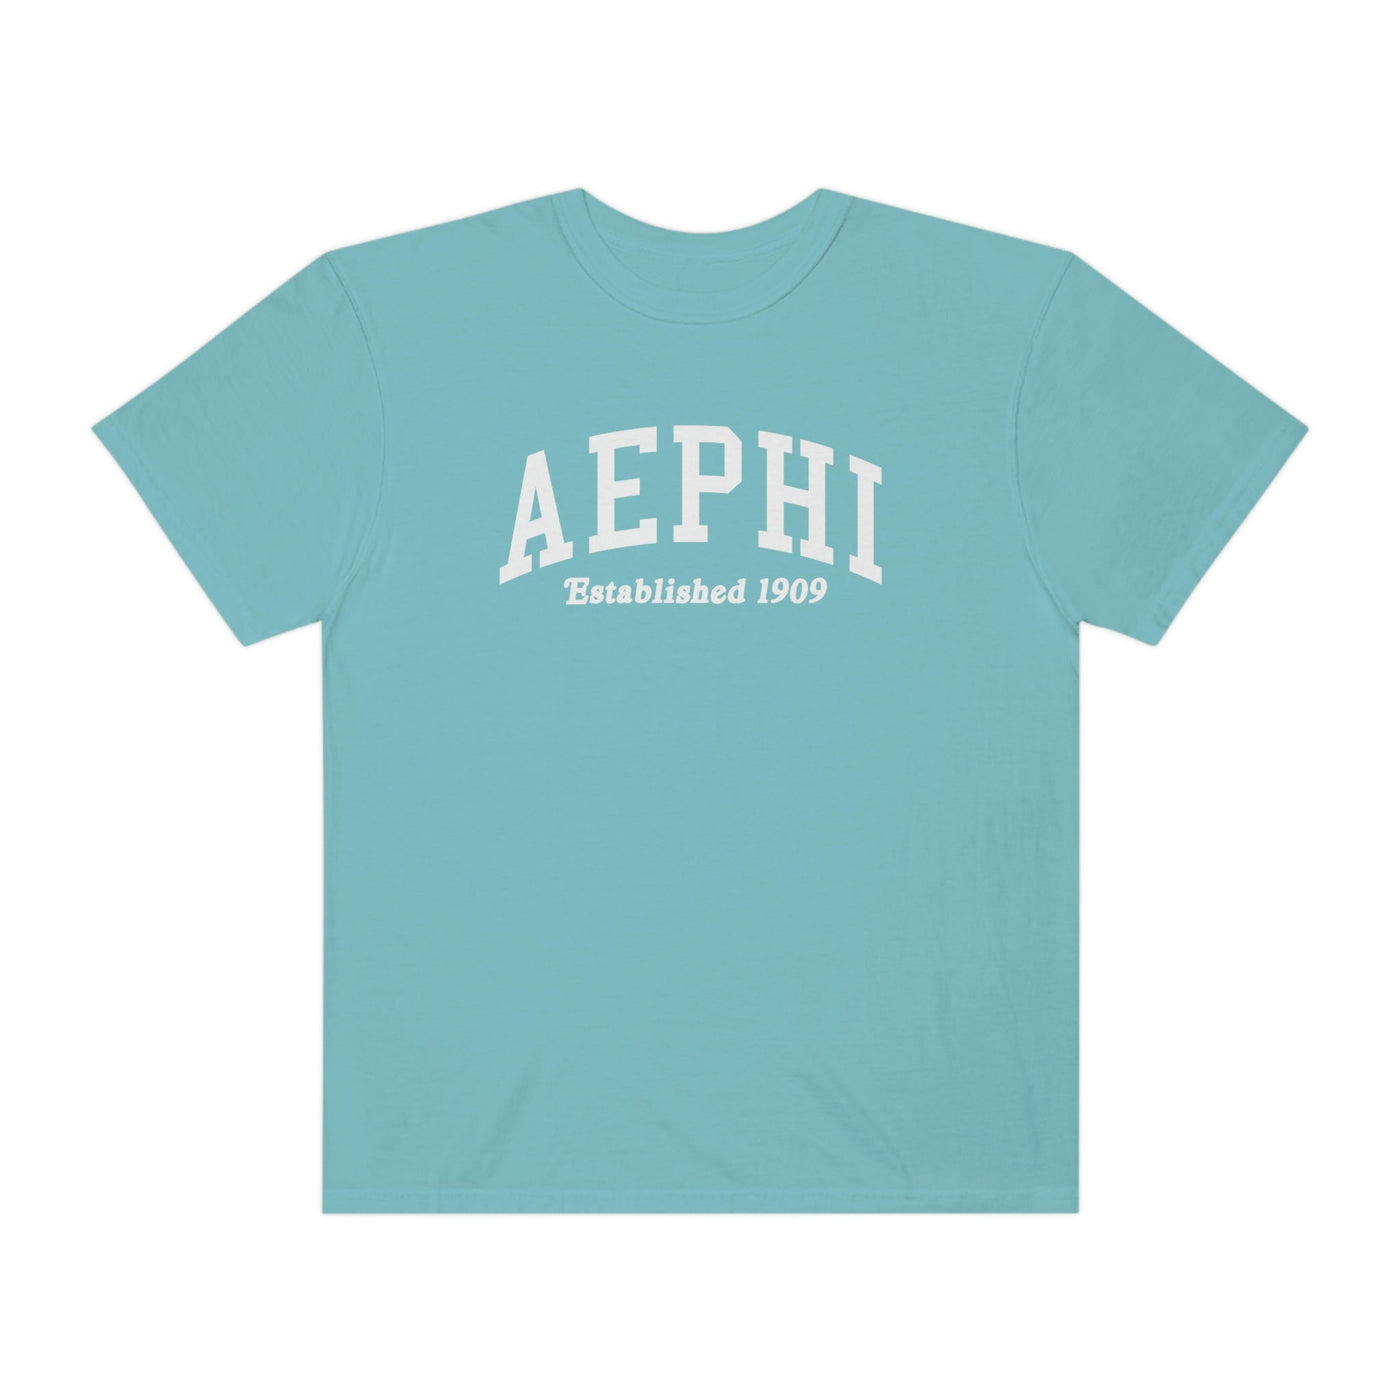 Alpha Epsilon Phi Varsity College Sorority Comfy T-Shirt